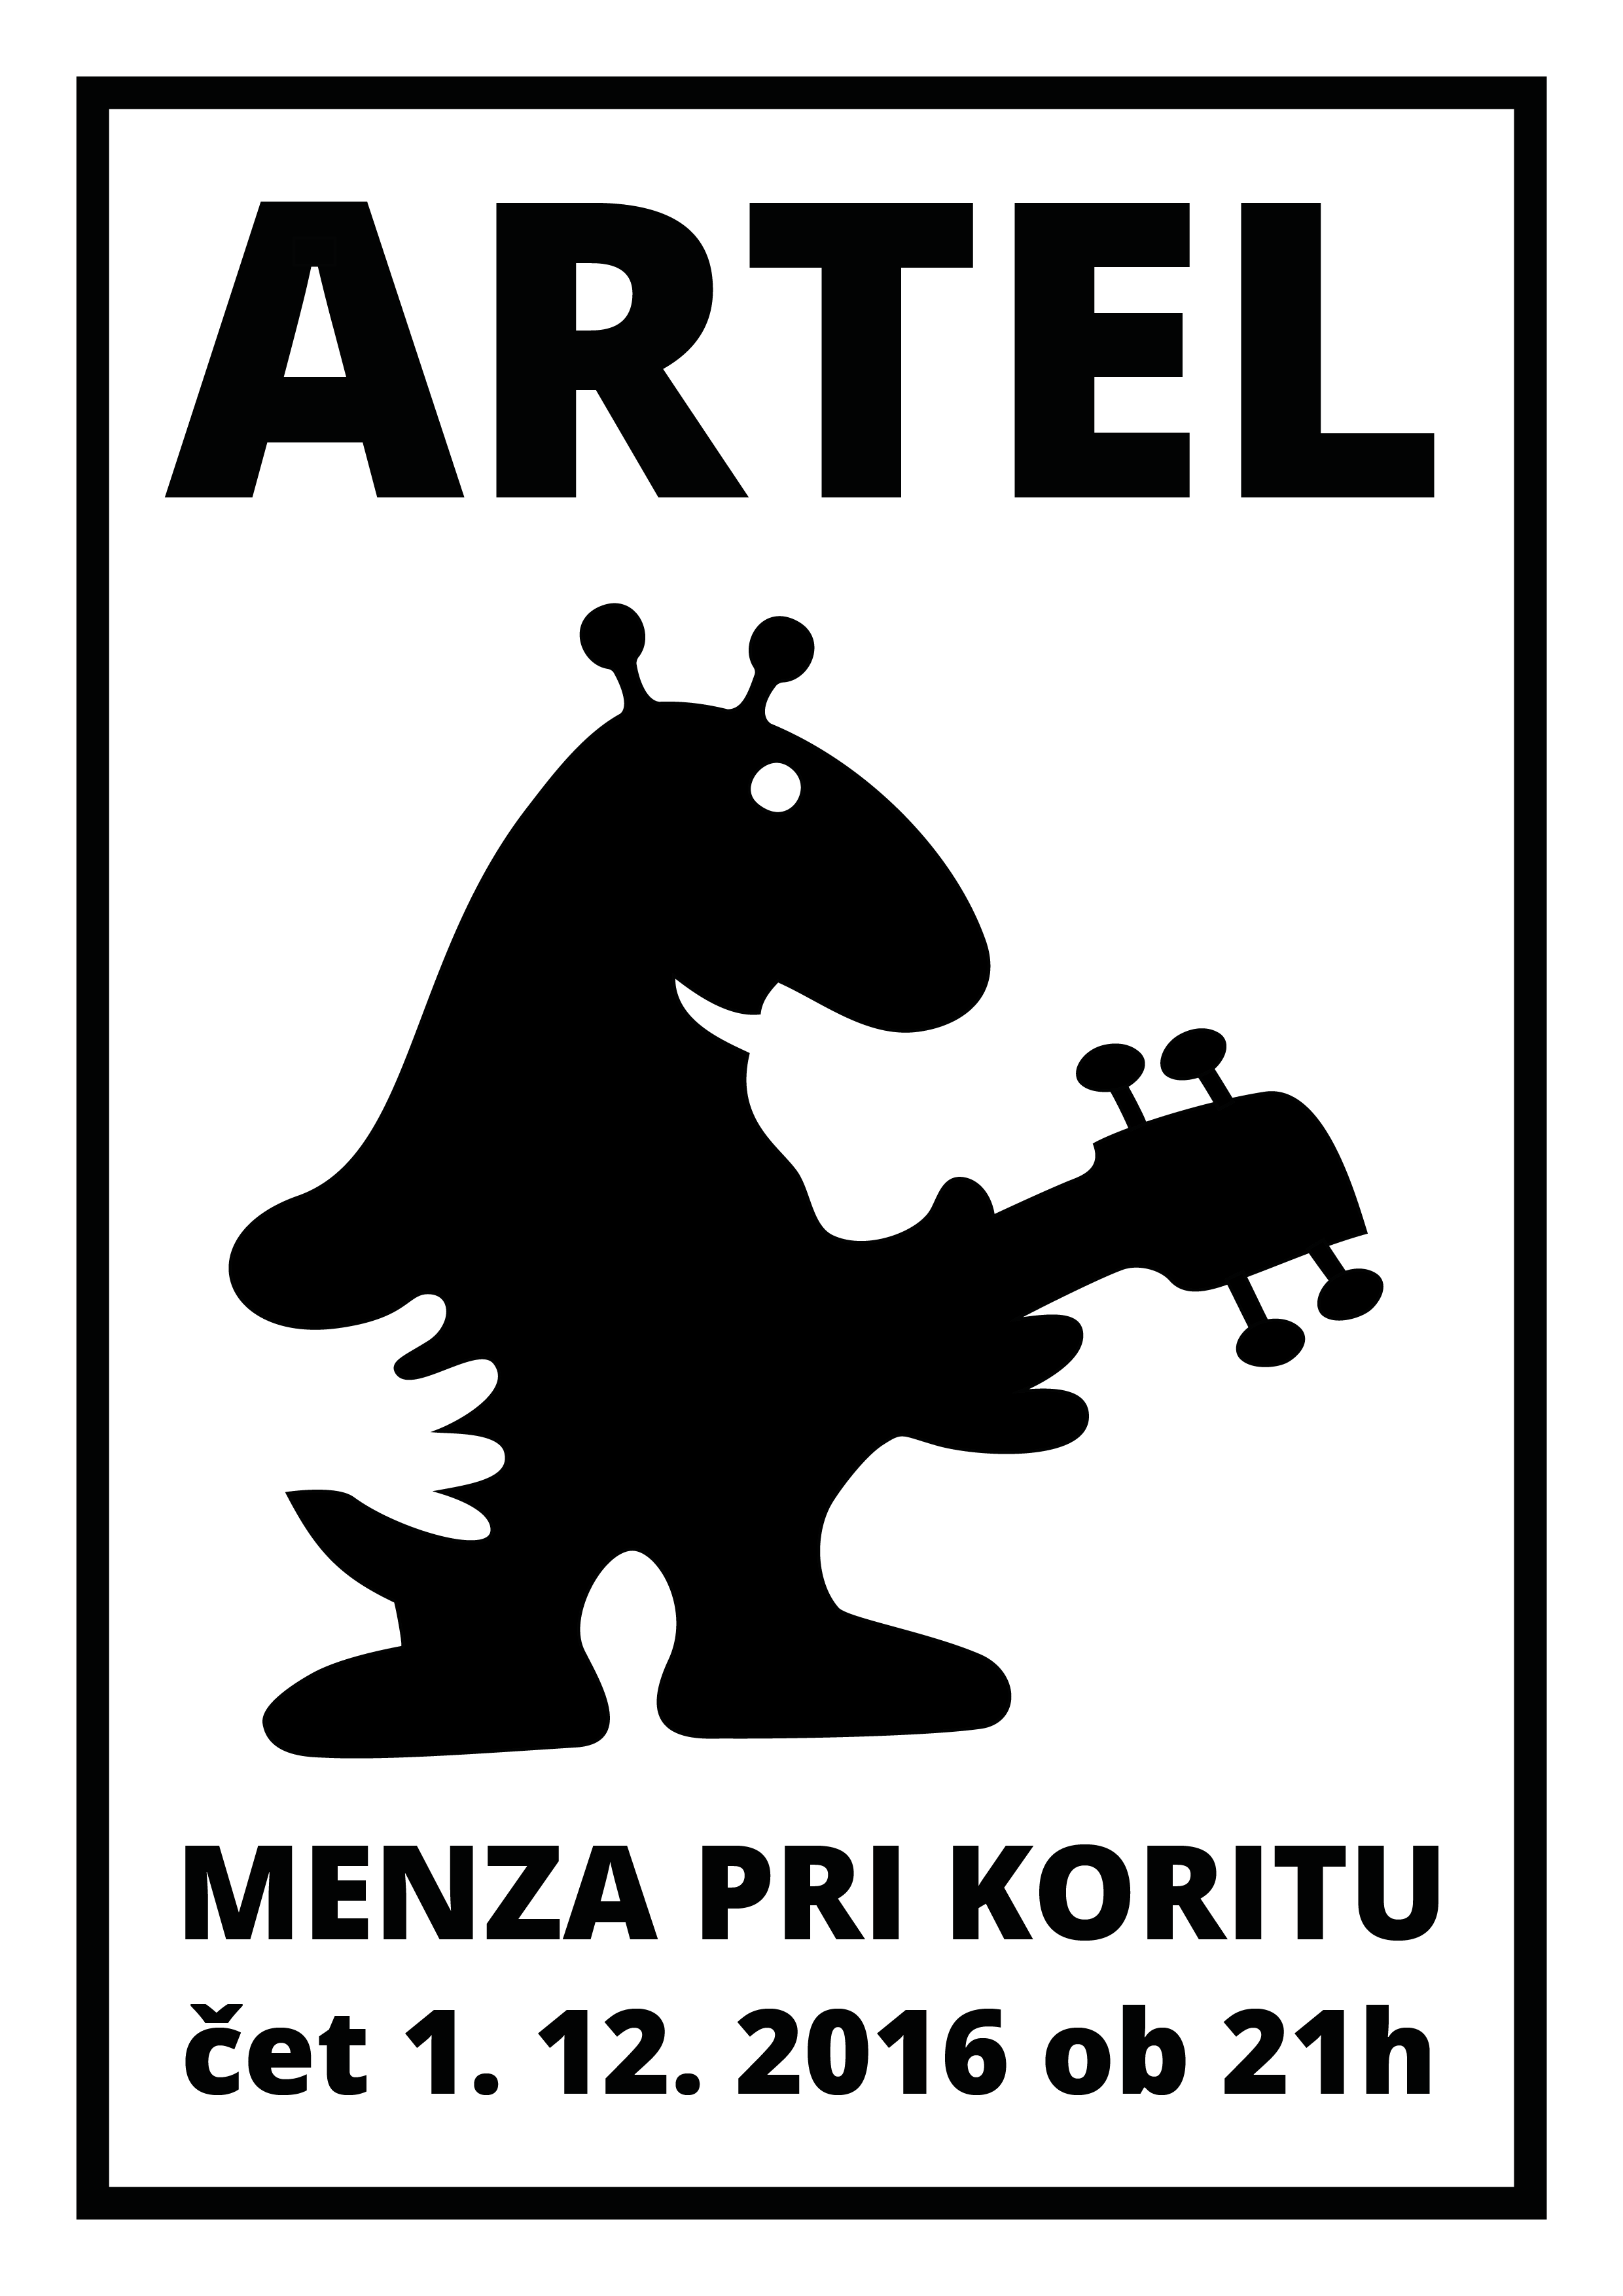 ARTEL